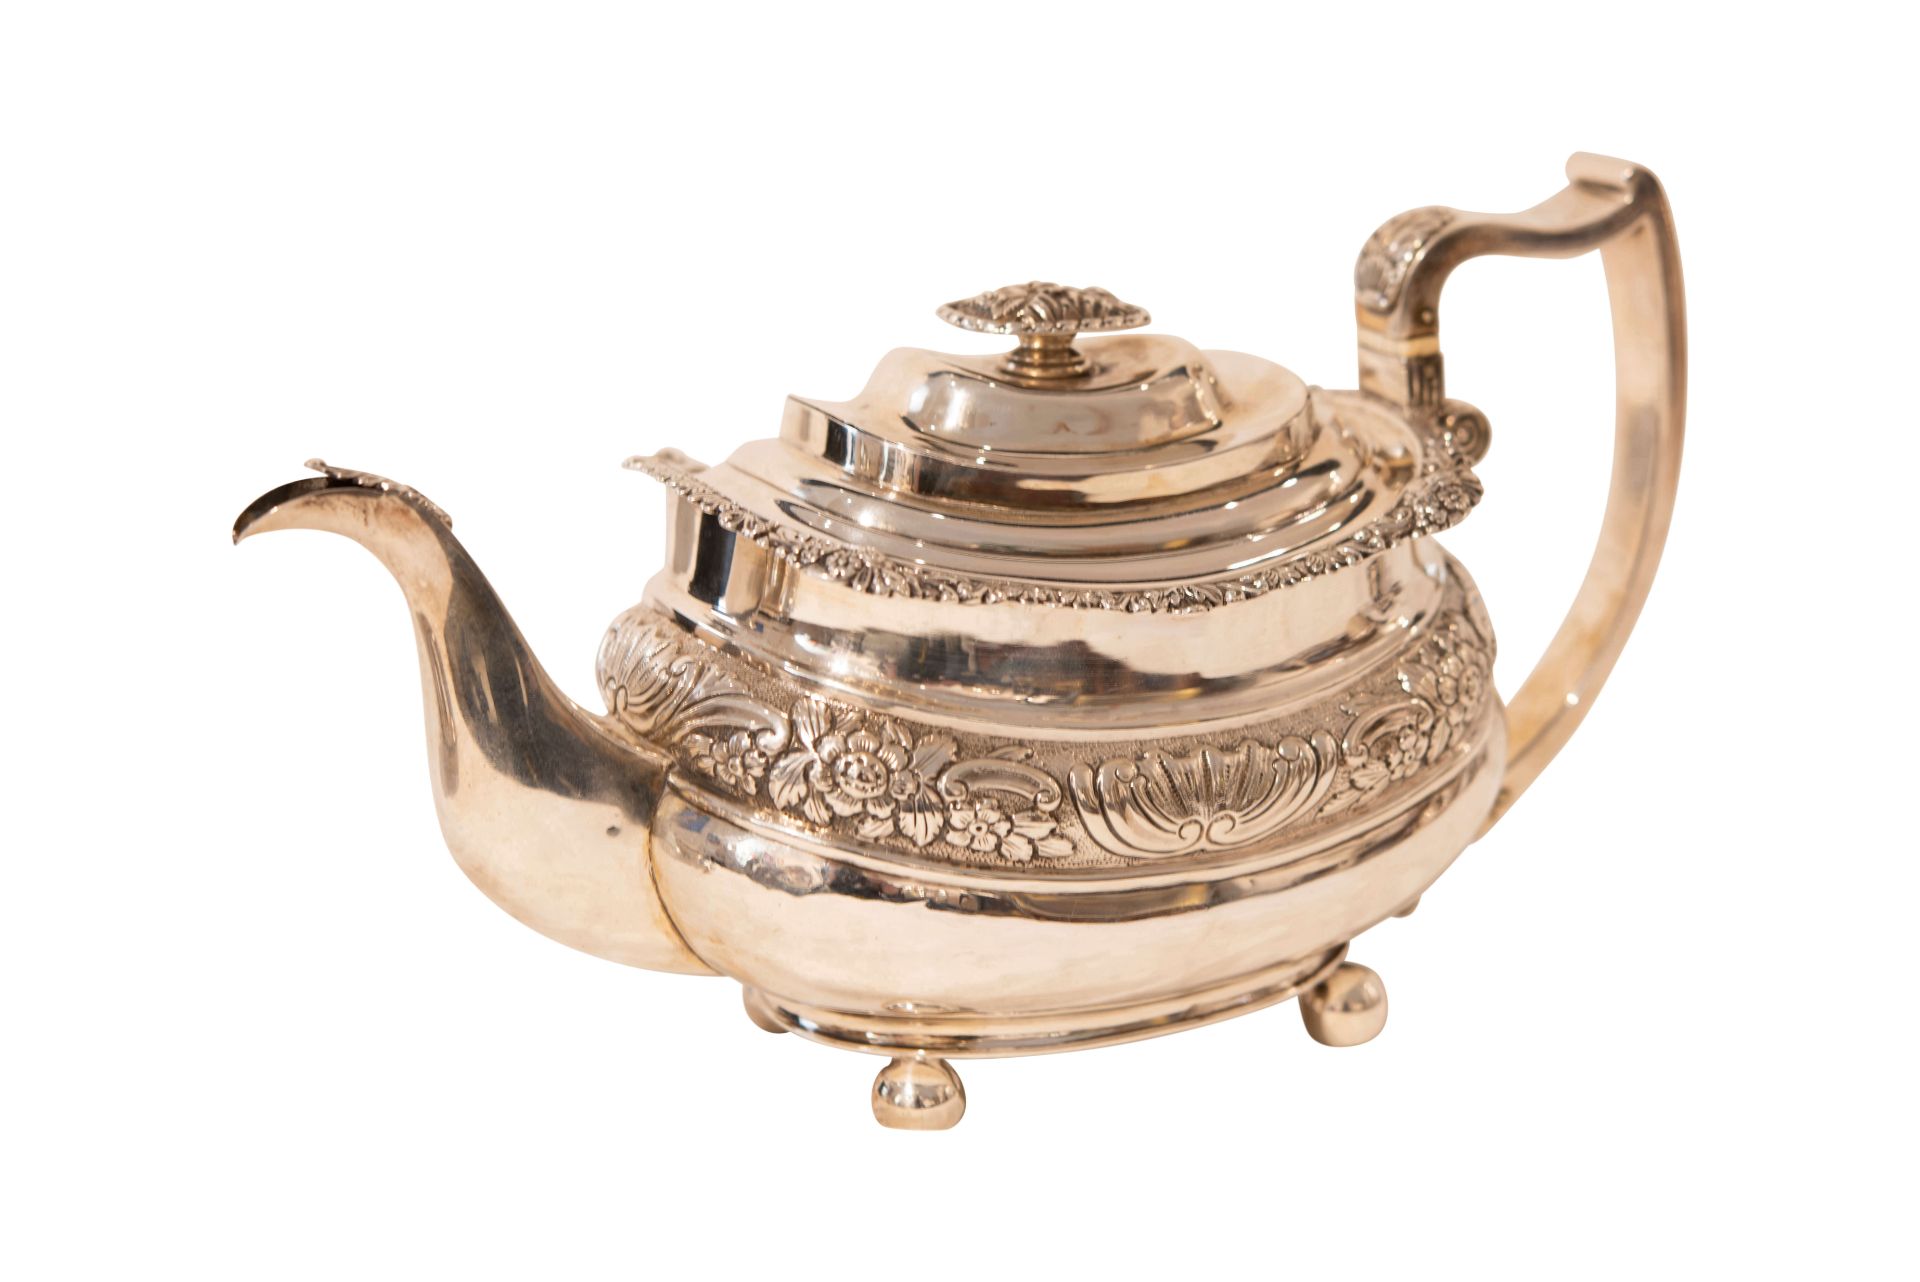 Massive antike Teekanne | Massive Antique Teapot - Image 3 of 5